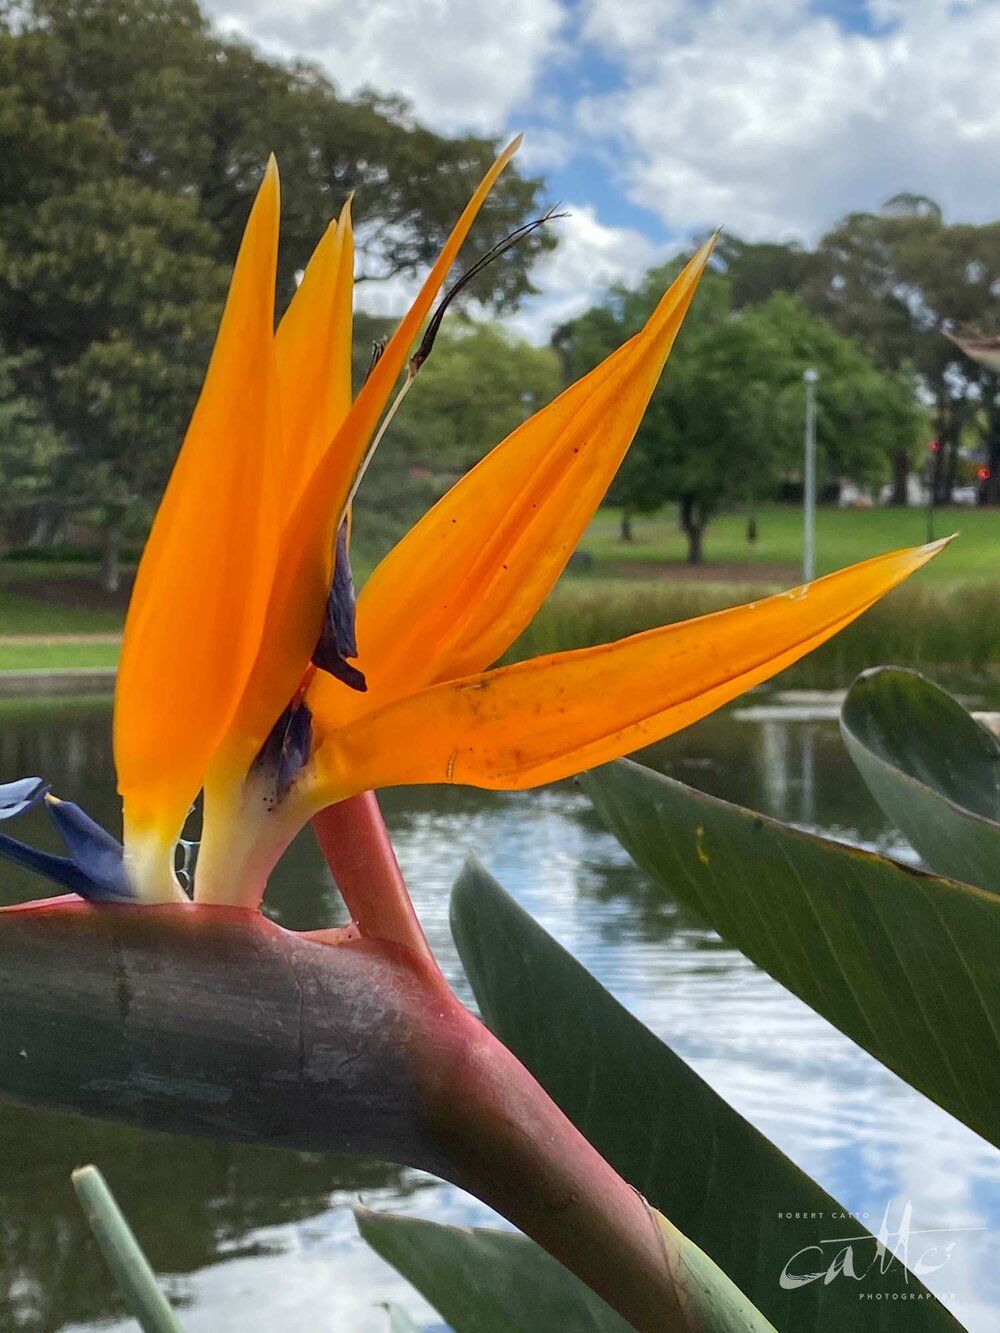 Bird of Paradise flower, Victoria Park, Sydney (iPhone 11 Pro - 2x zoom lens)